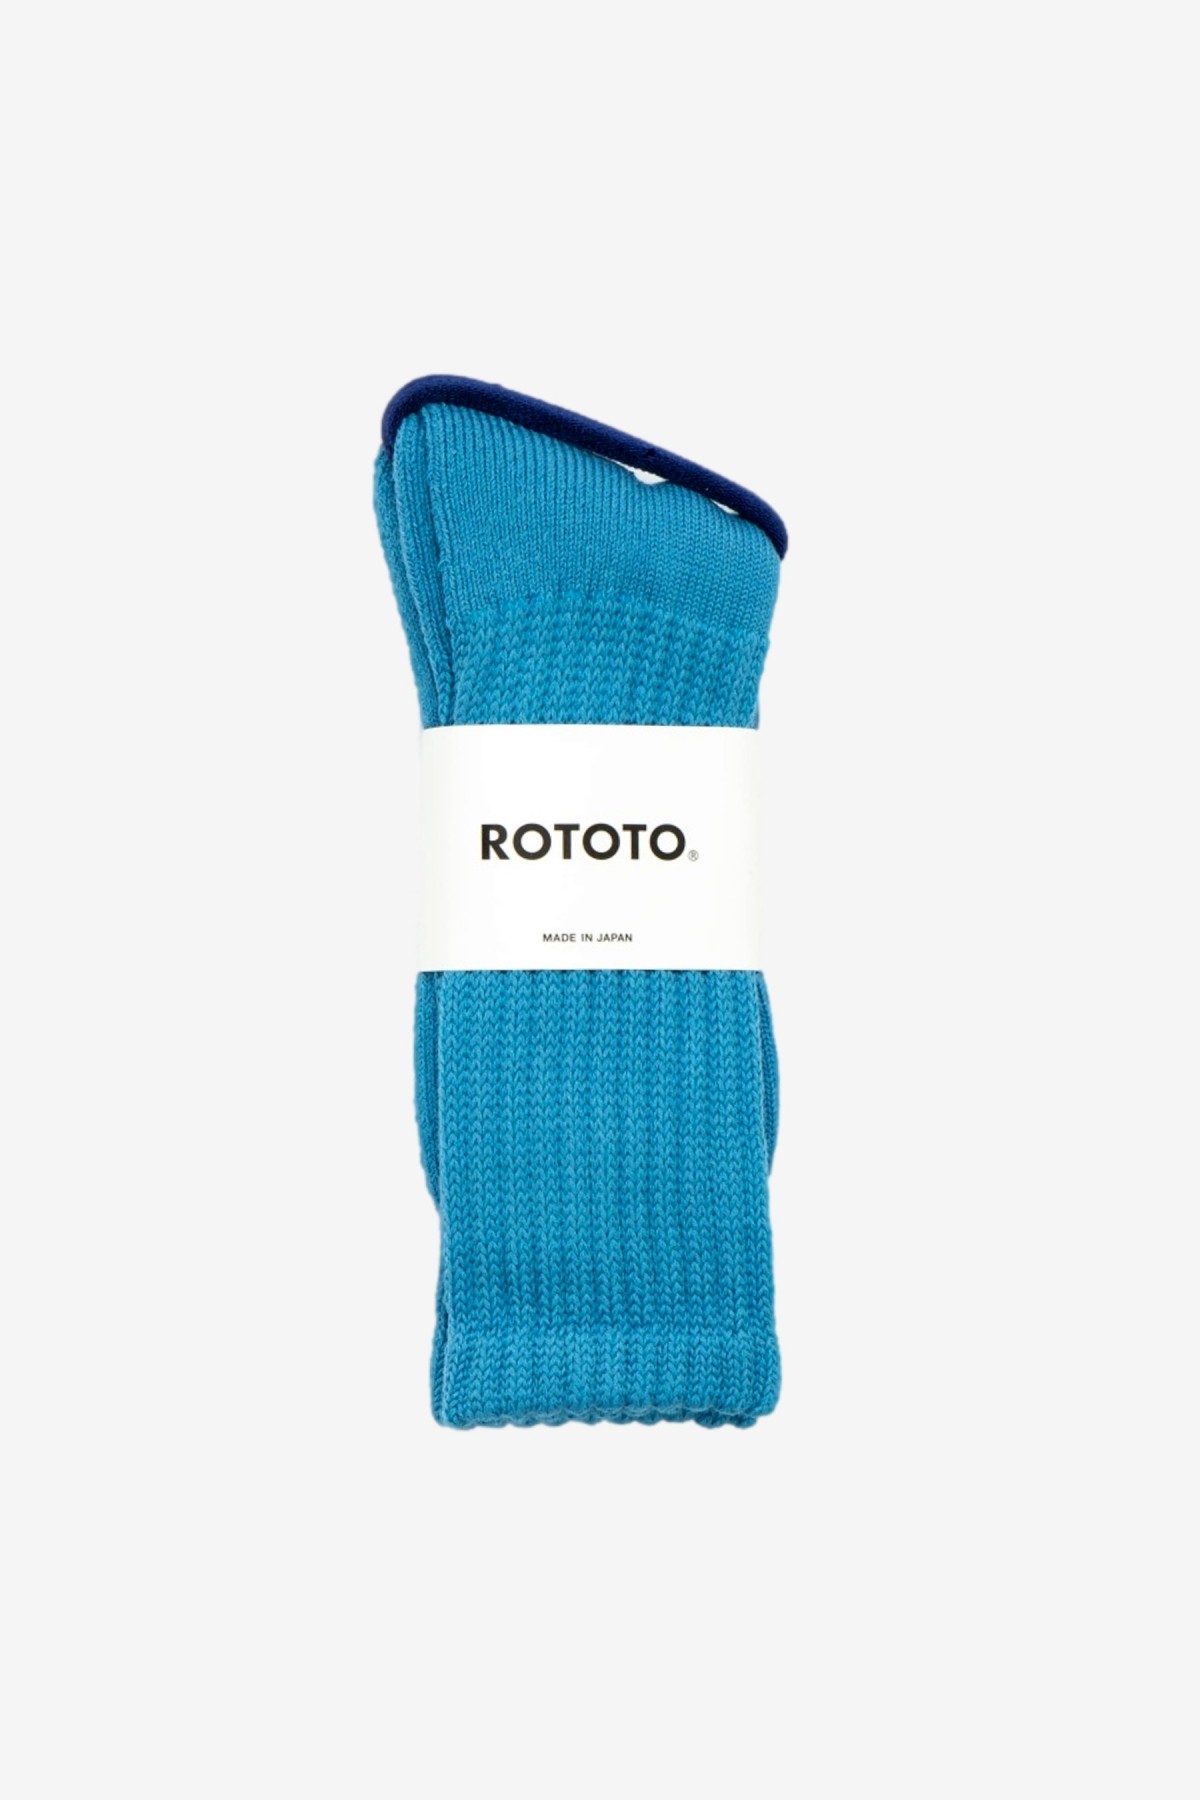 RoToTo Loose Pile Socks in Medium Blue